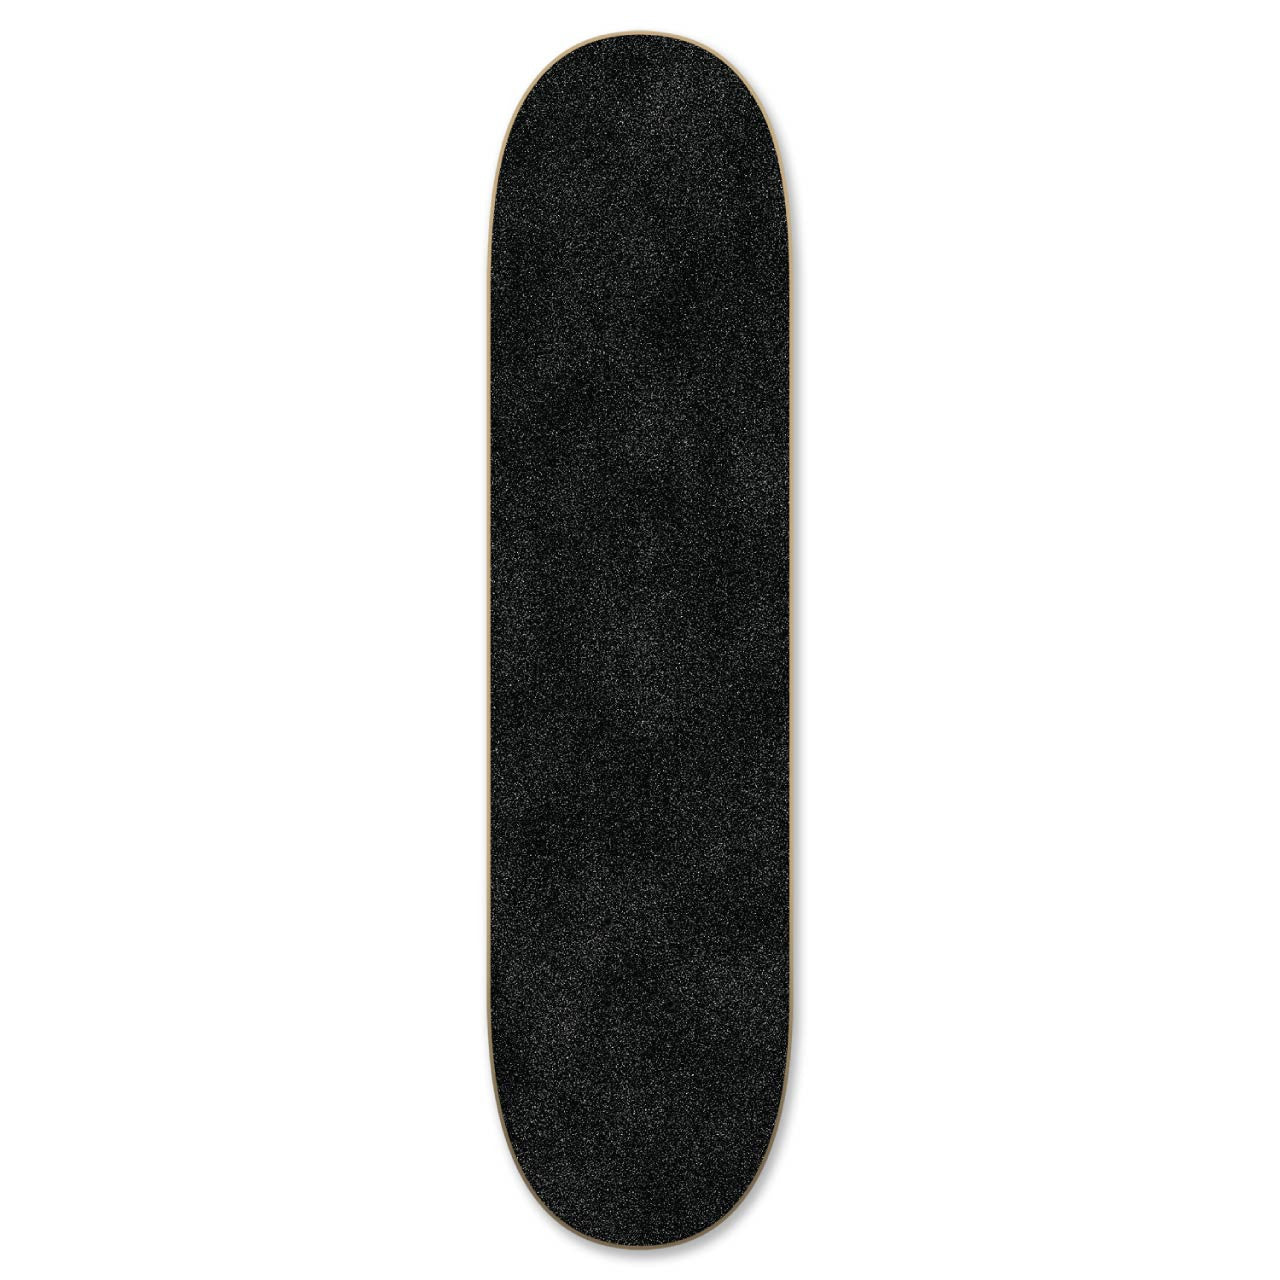 Graphic Smite Skateboard Deck